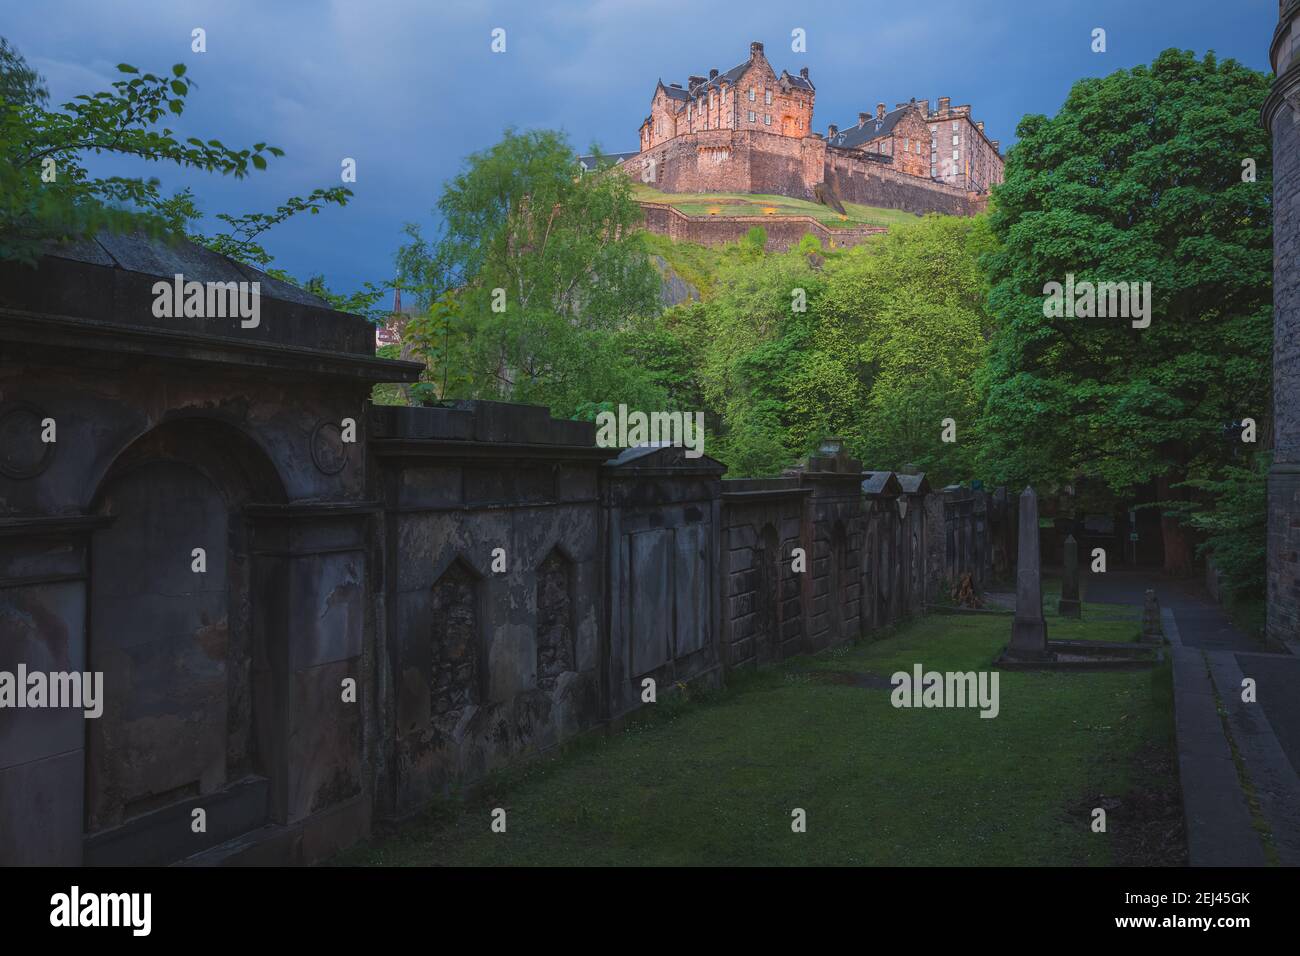 A spooky, moody view of the landmark Edinburgh Castle at night from St Cuthbert cemetery in Edinburgh, Scotland. Stock Photo